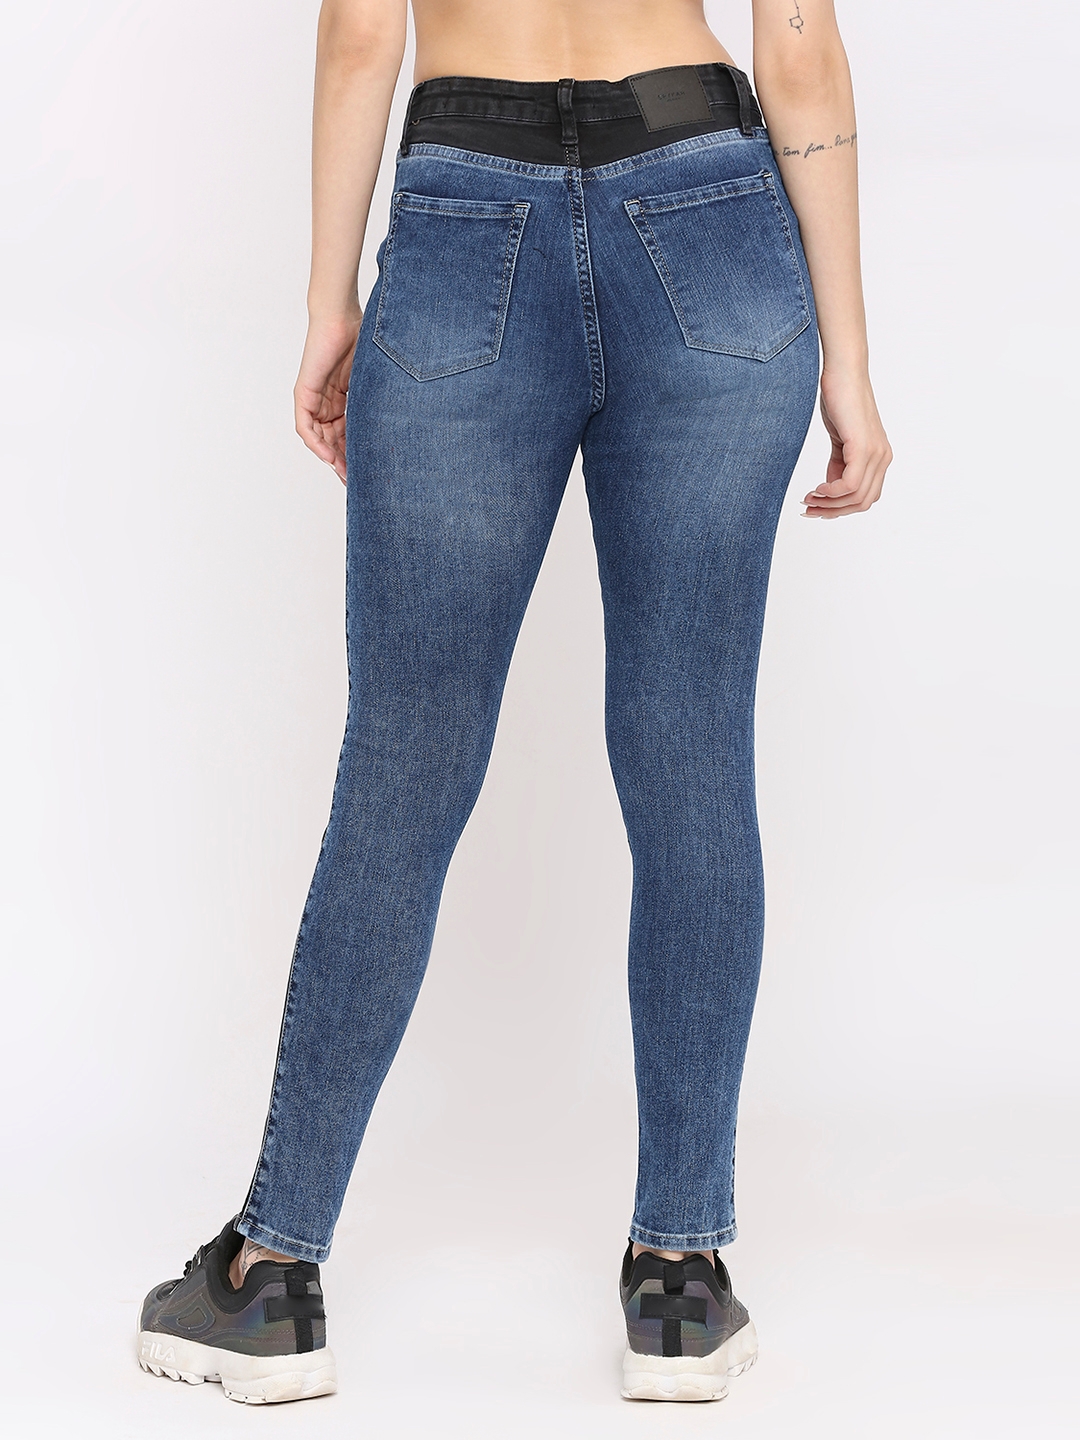 Denim Lycra Jeans at Best Price in New Delhi, Delhi | A.f Enterprises